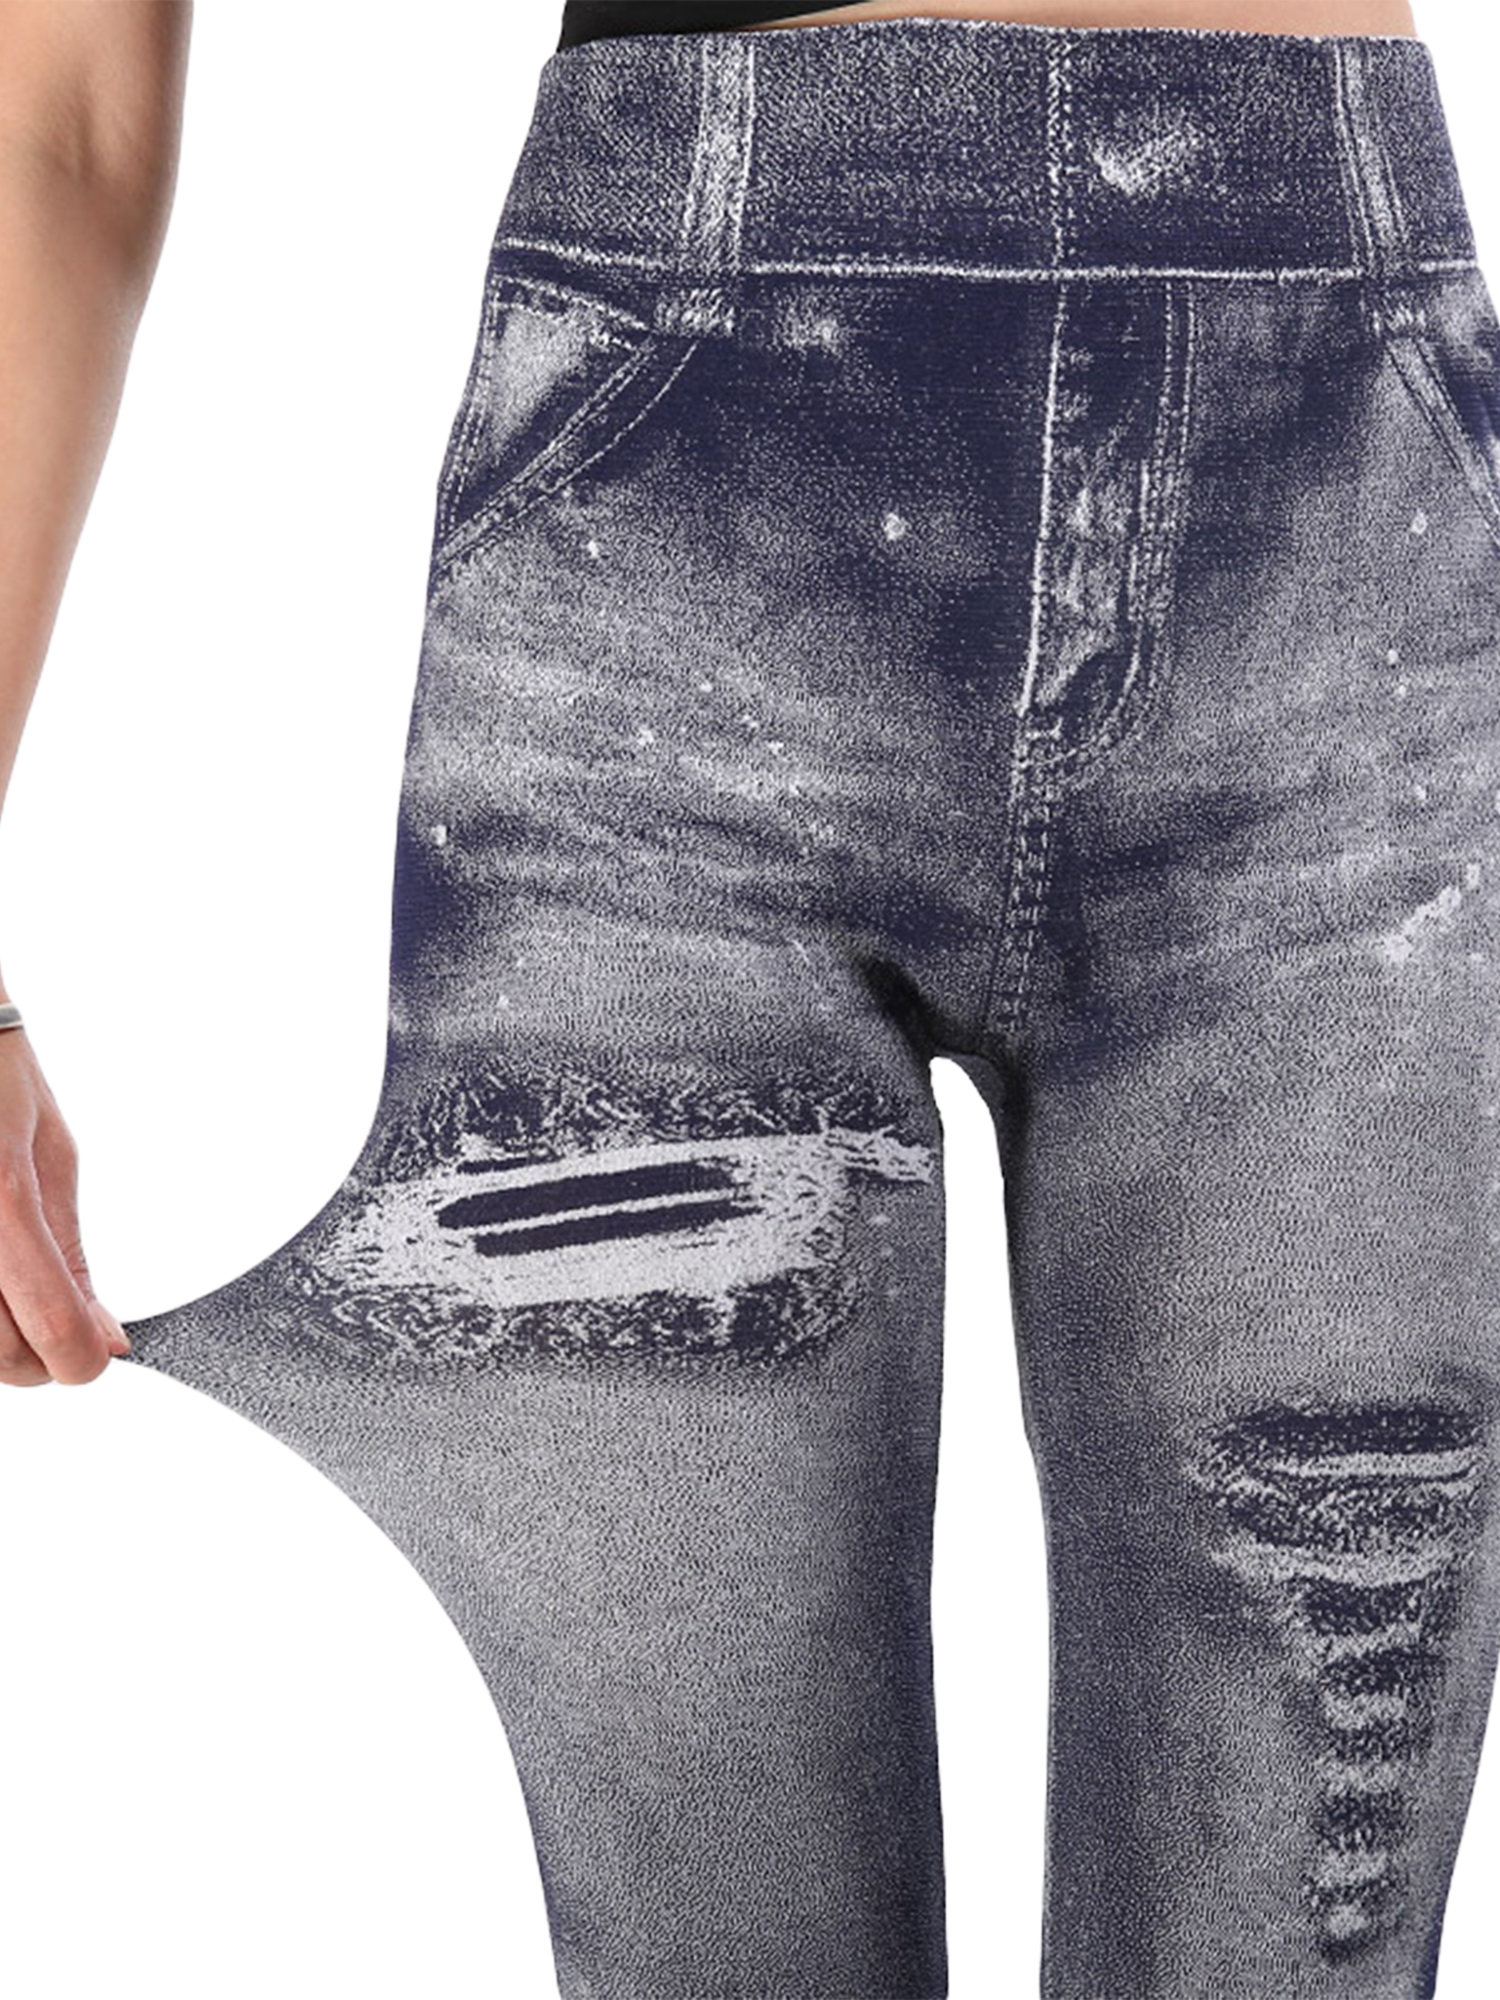 Avamo High Waist Jeggings for Women Denim Print Seamless Stretch Leggings Pants Ladies Casual Slim Fit Trousers - image 3 of 3